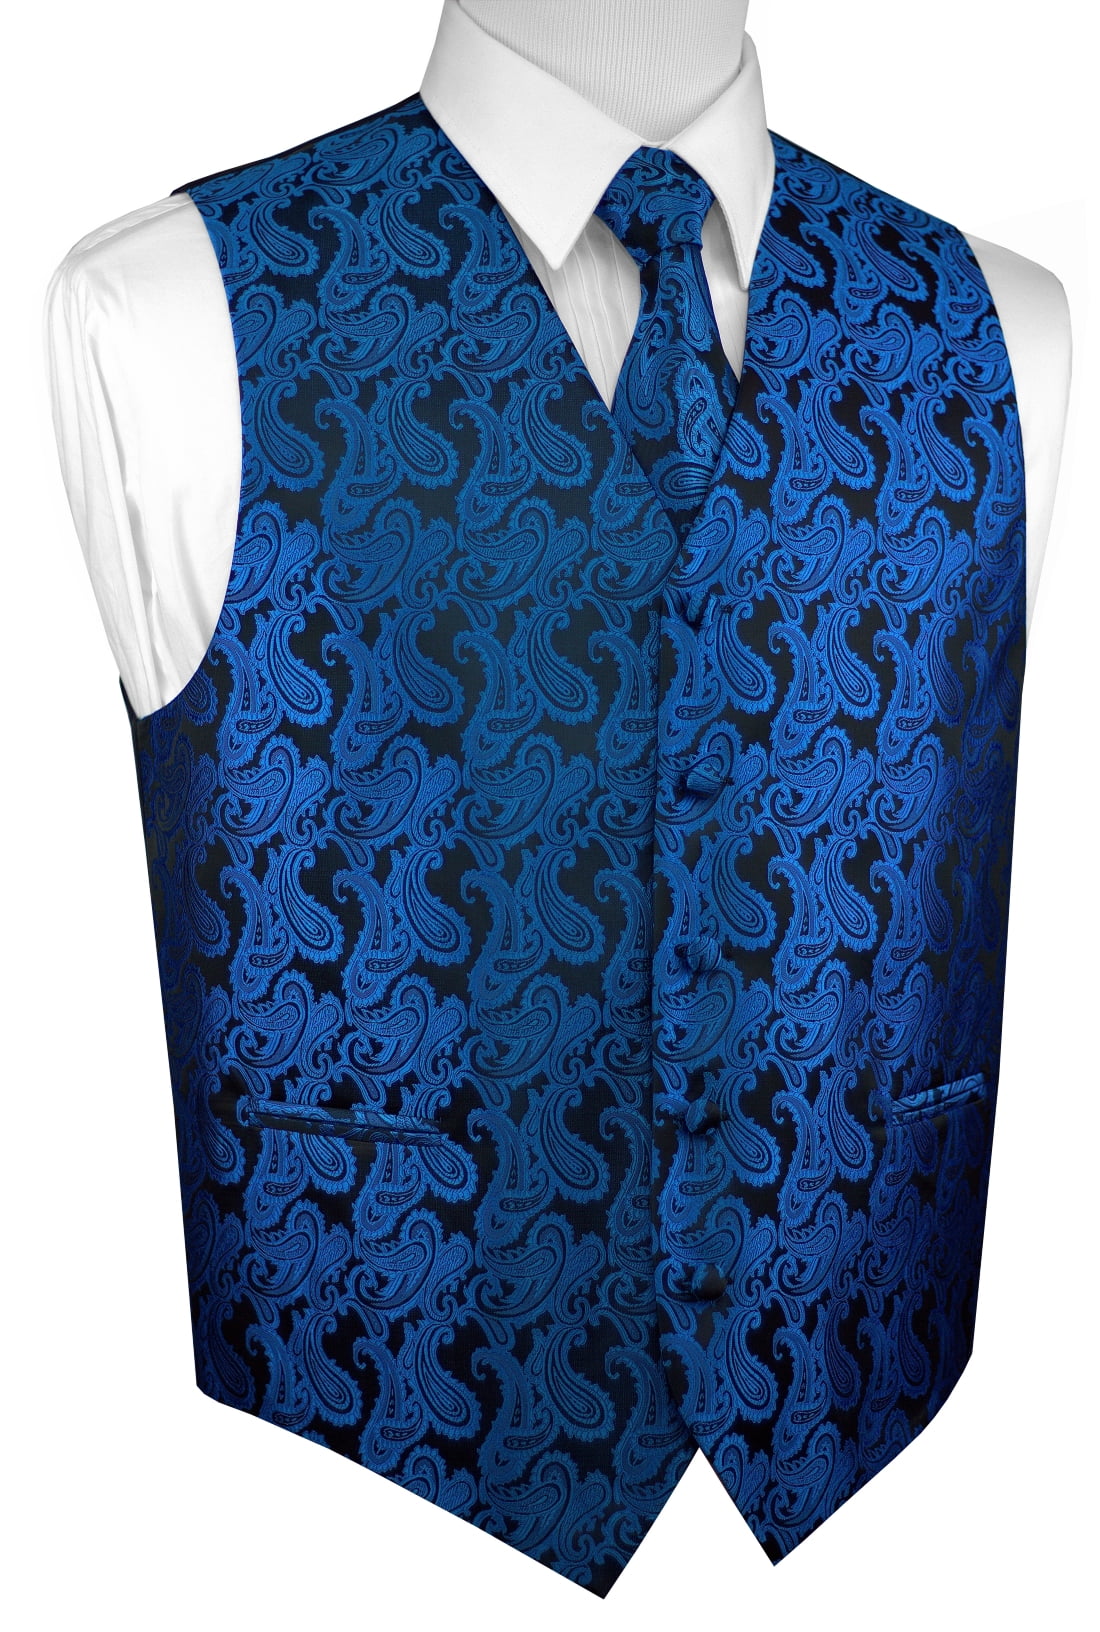 ROYAL BLUE Paisley Tuxedo Dress Vest Waistcoat & Neck tie & Bowtie & Hanky SET